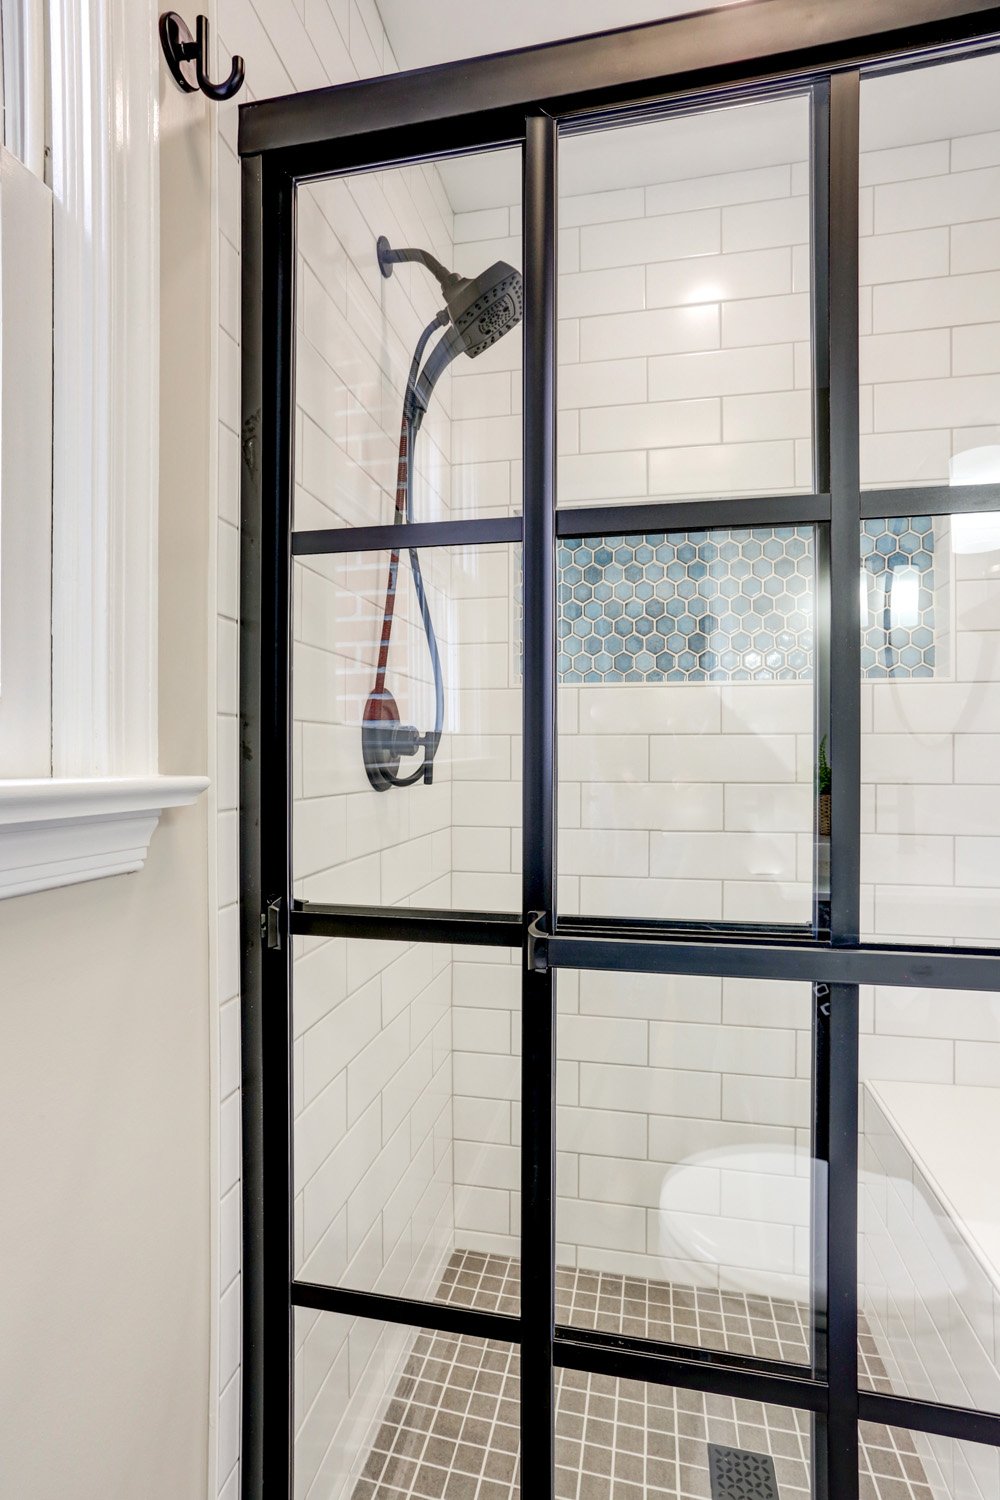 Grid Sliding Shower doors in Master Bathroom Remodel in Lancaster